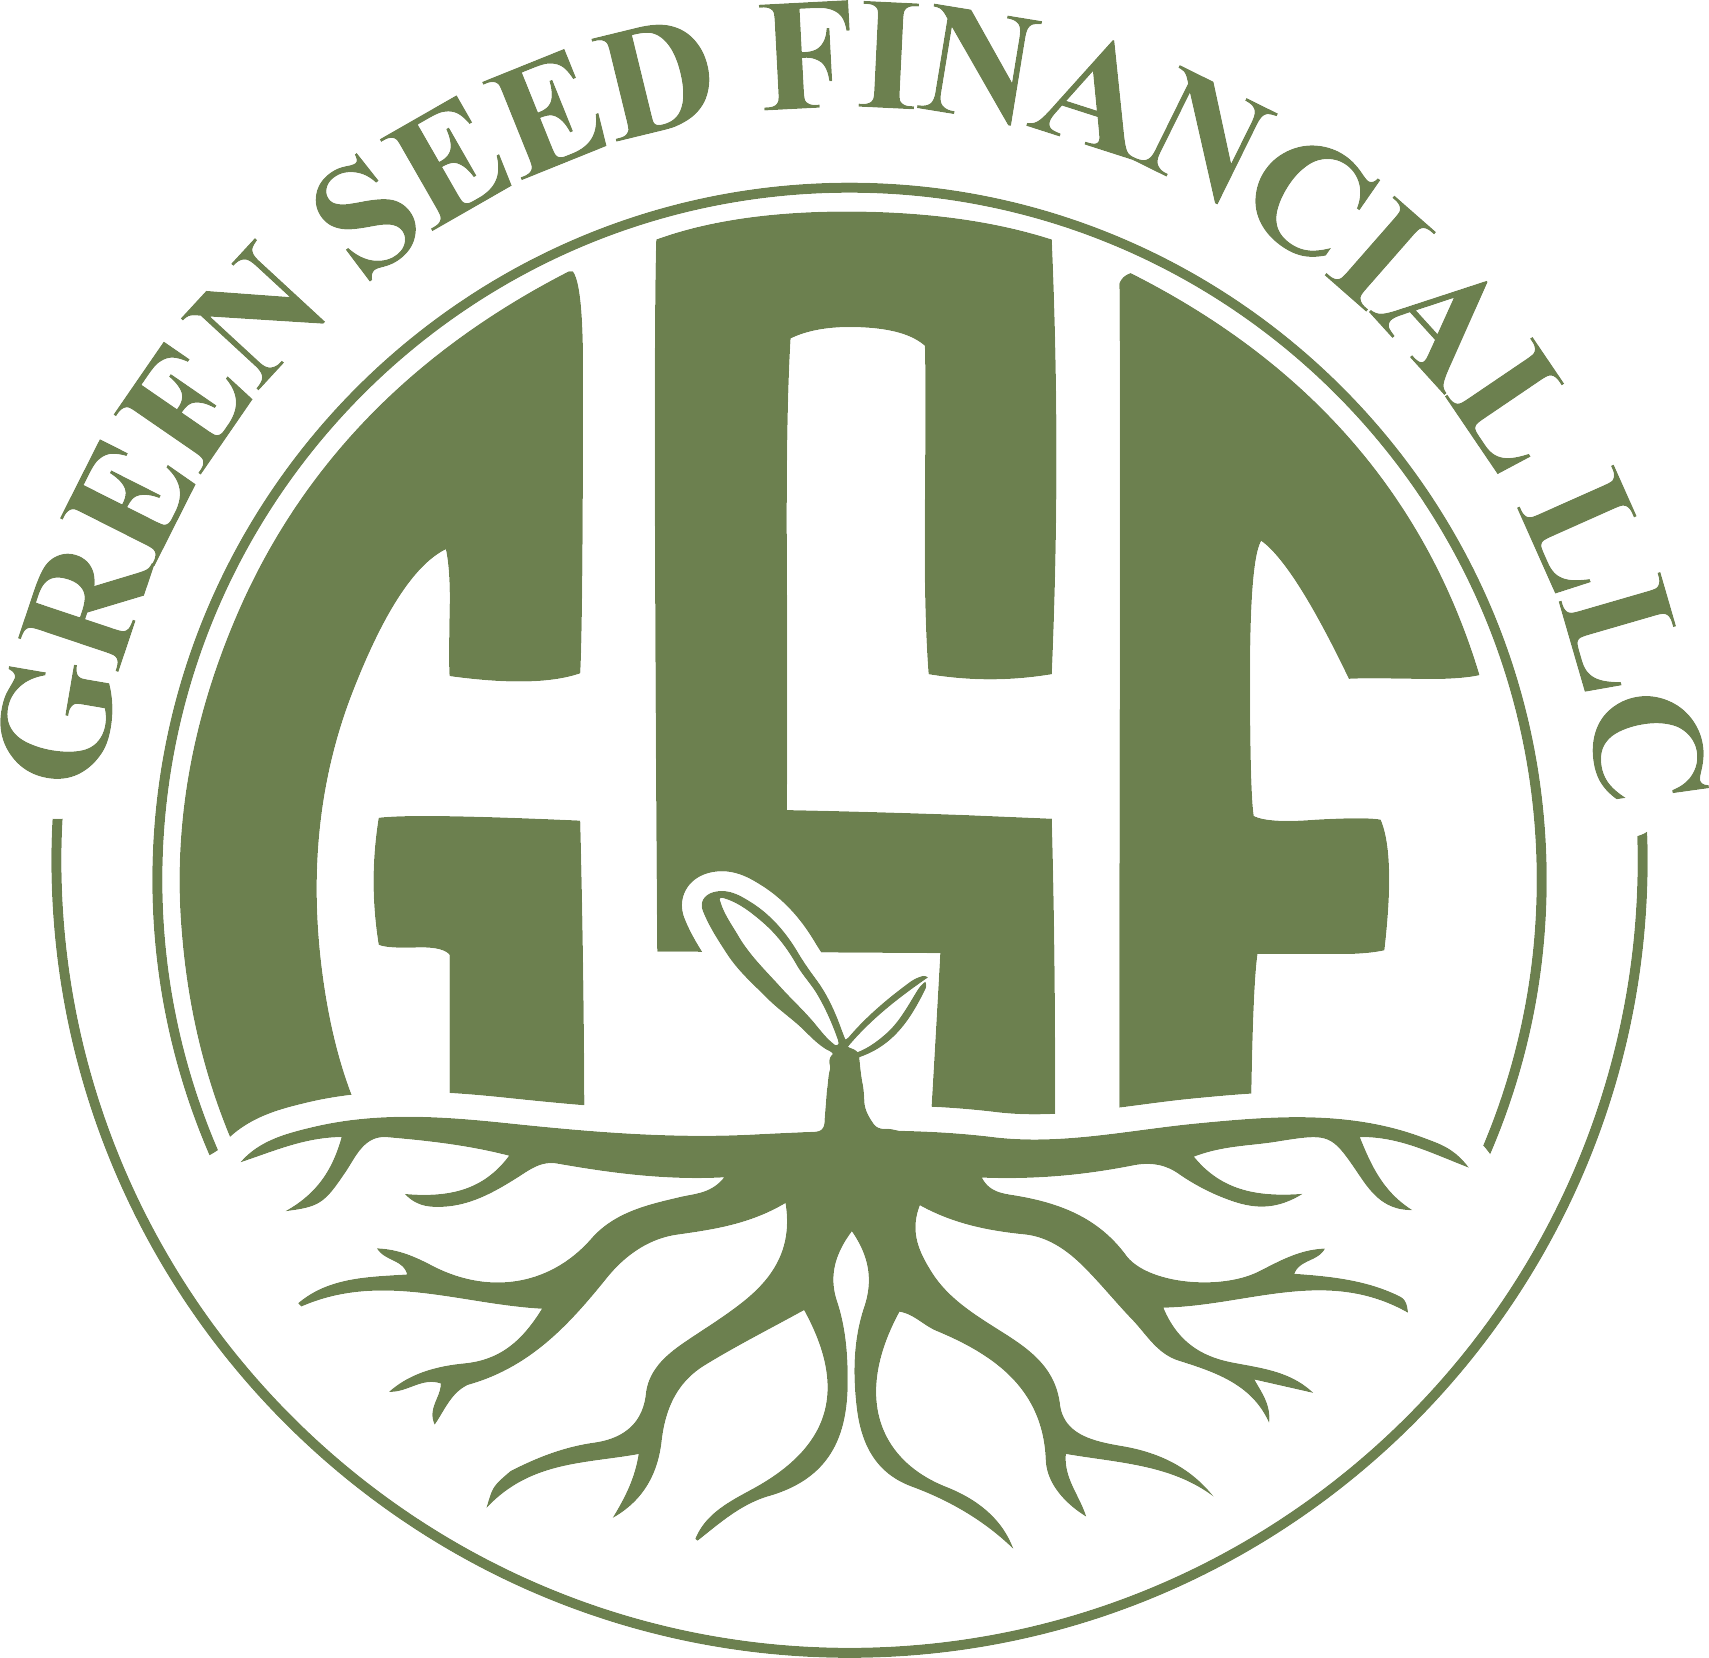 Green Seed Financial LLC